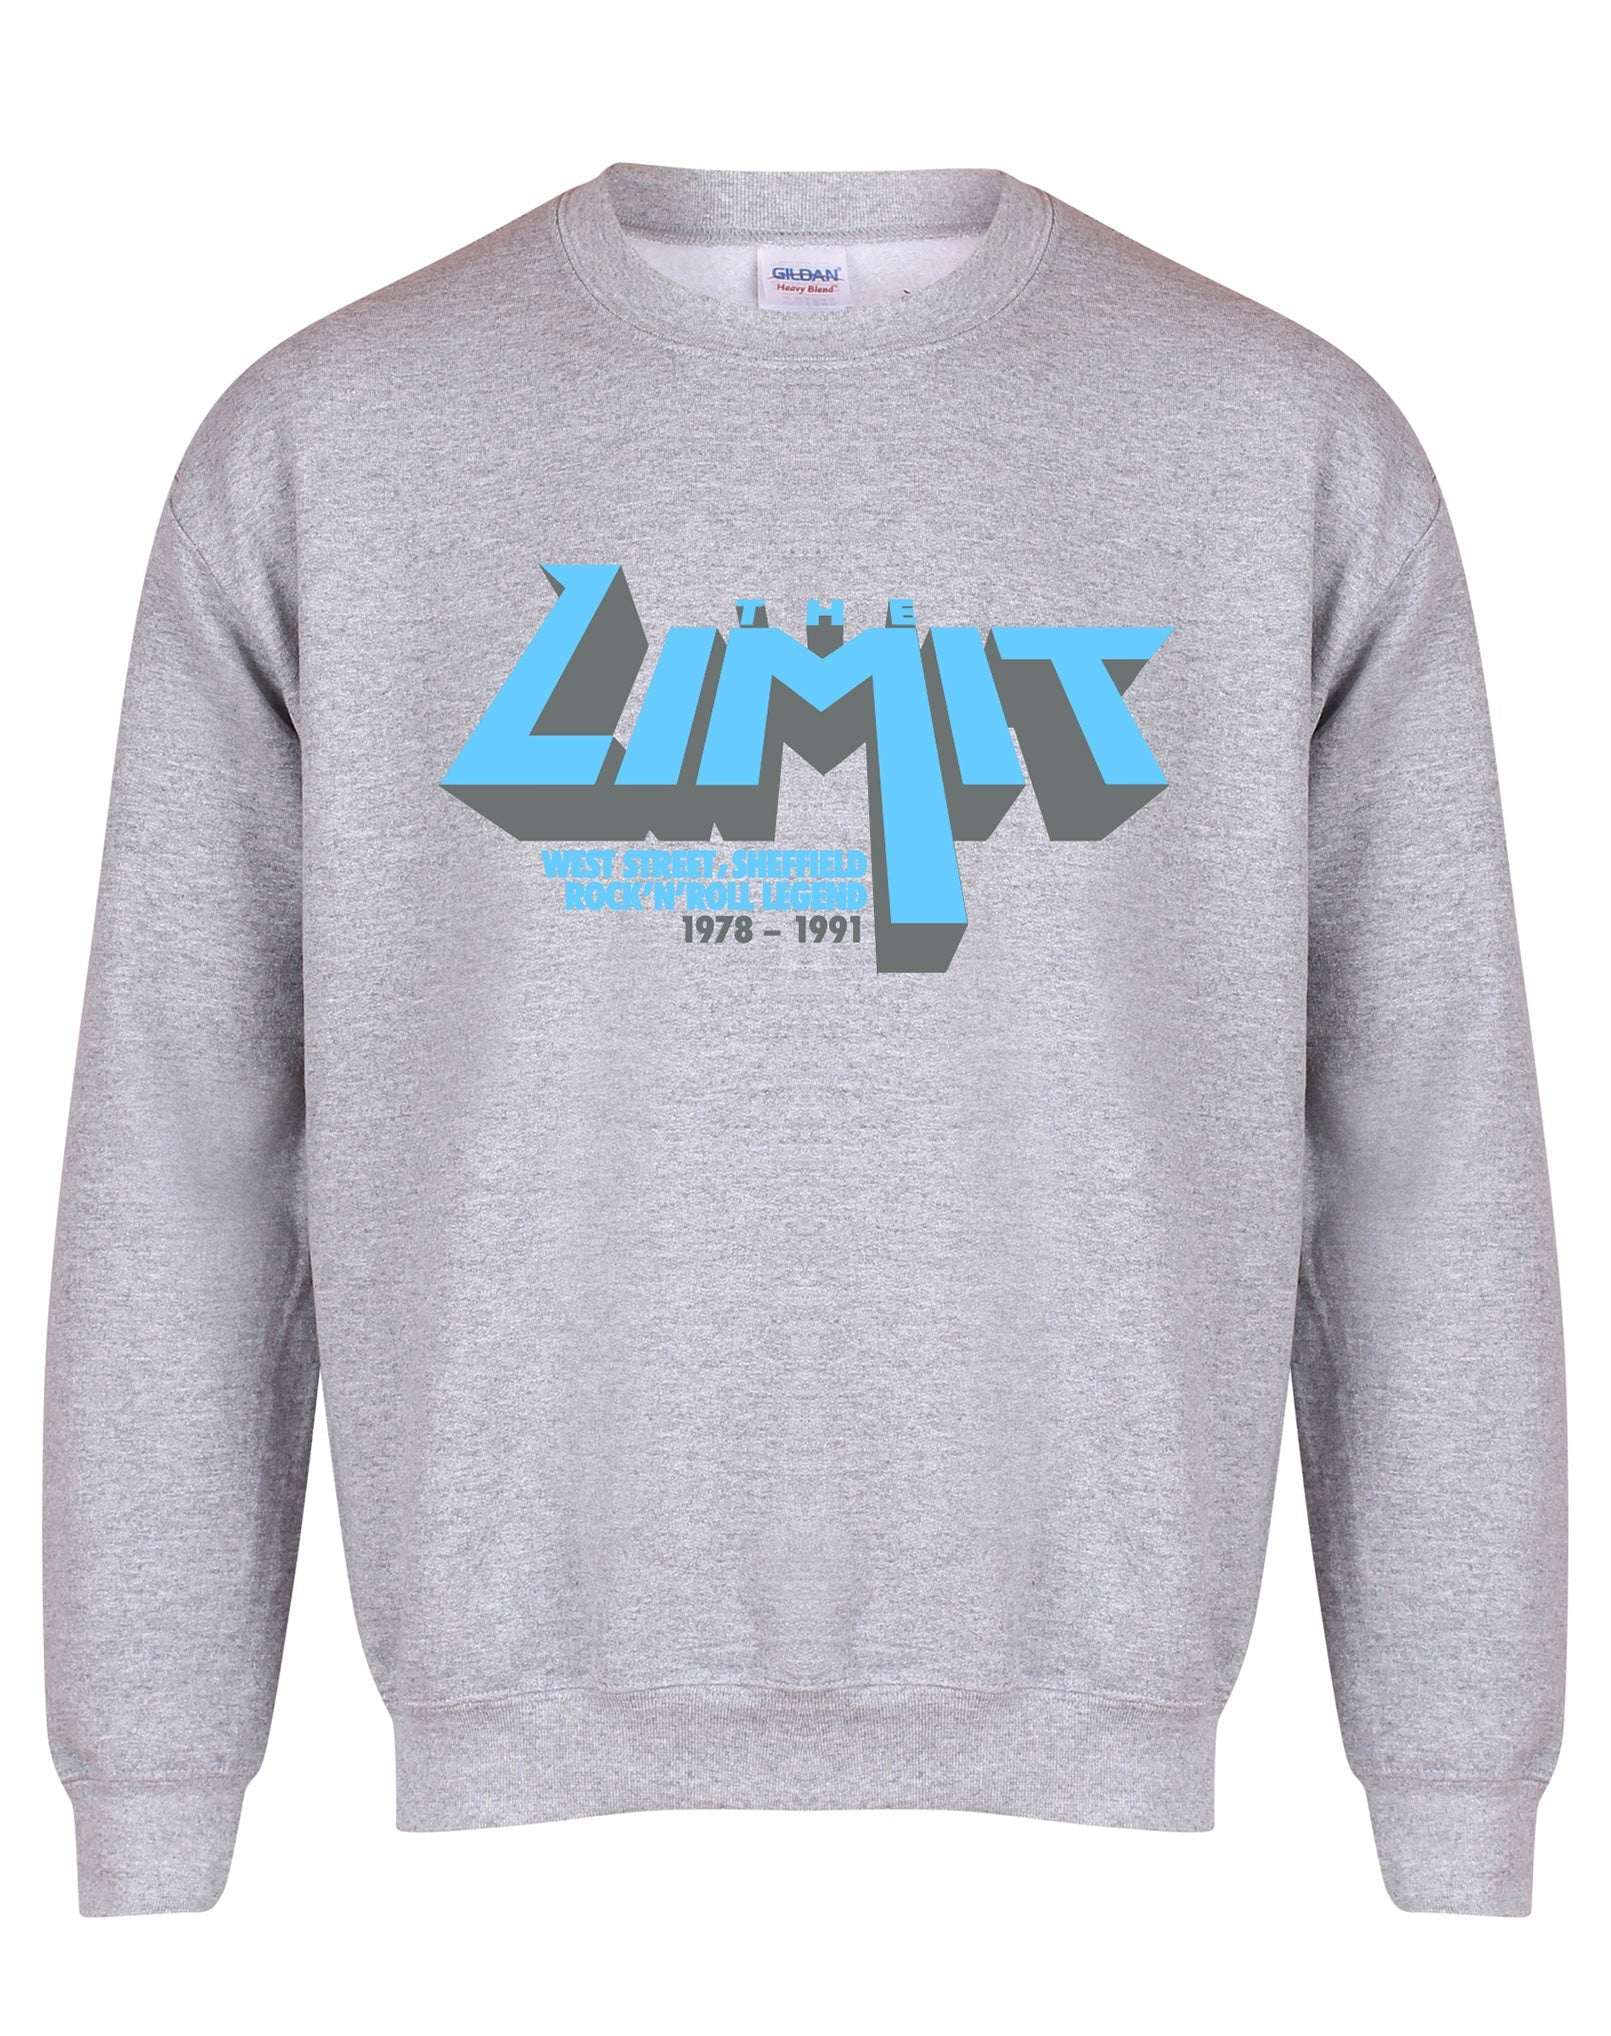 Limit anniversary (blue logo) unisex fit sweatshirt - various colours - Dirty Stop Outs